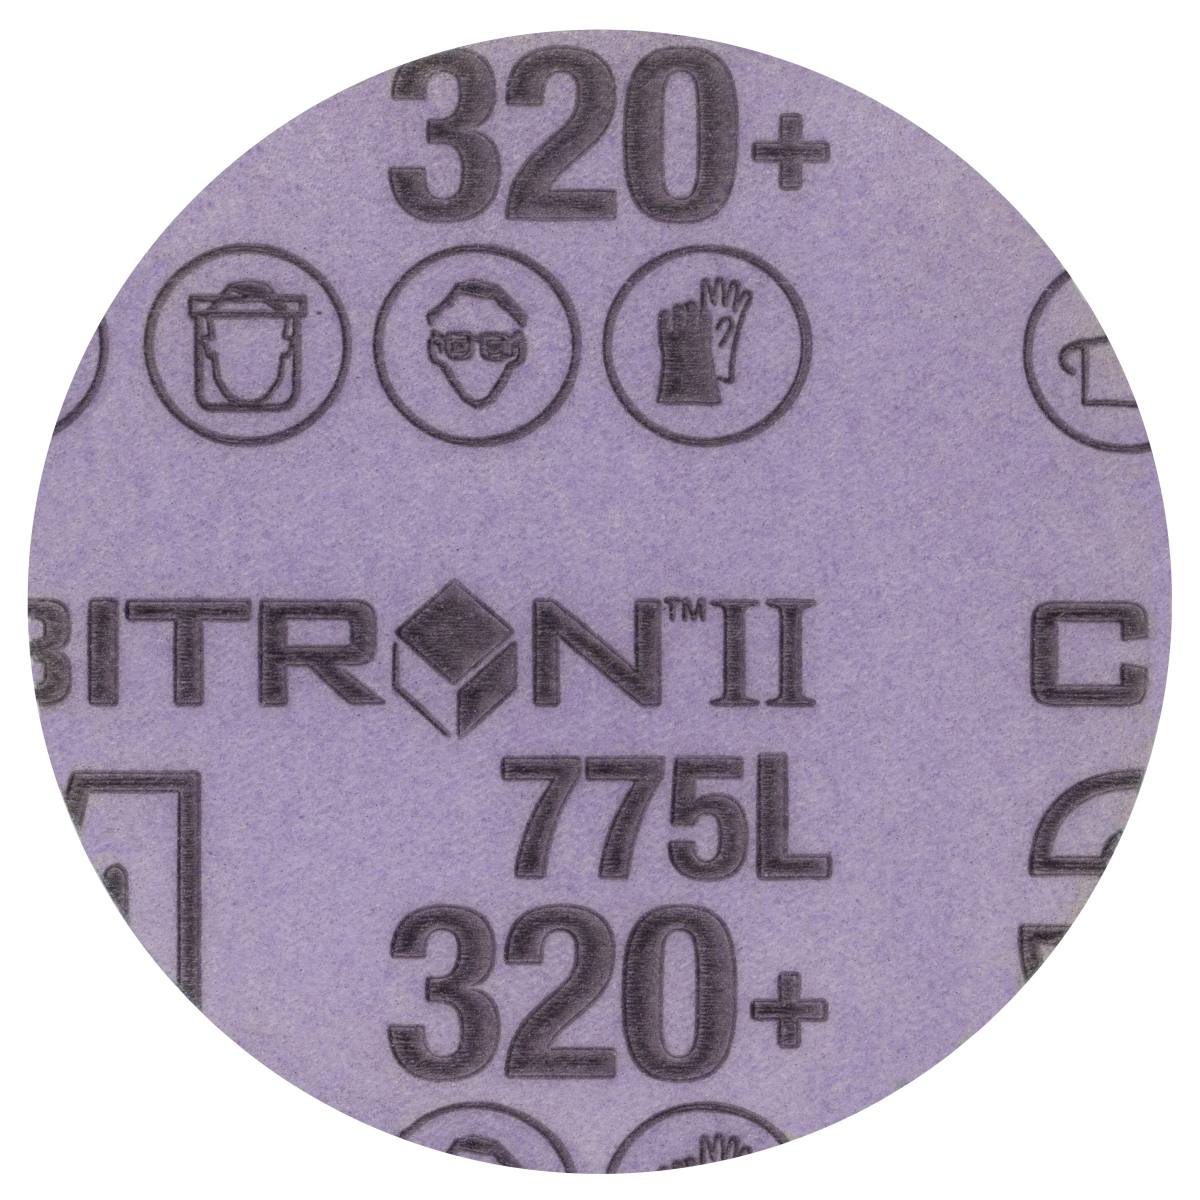 3M Cubitron II Hookit film disc 775L, 125 mm, 320+, non perforato #47080